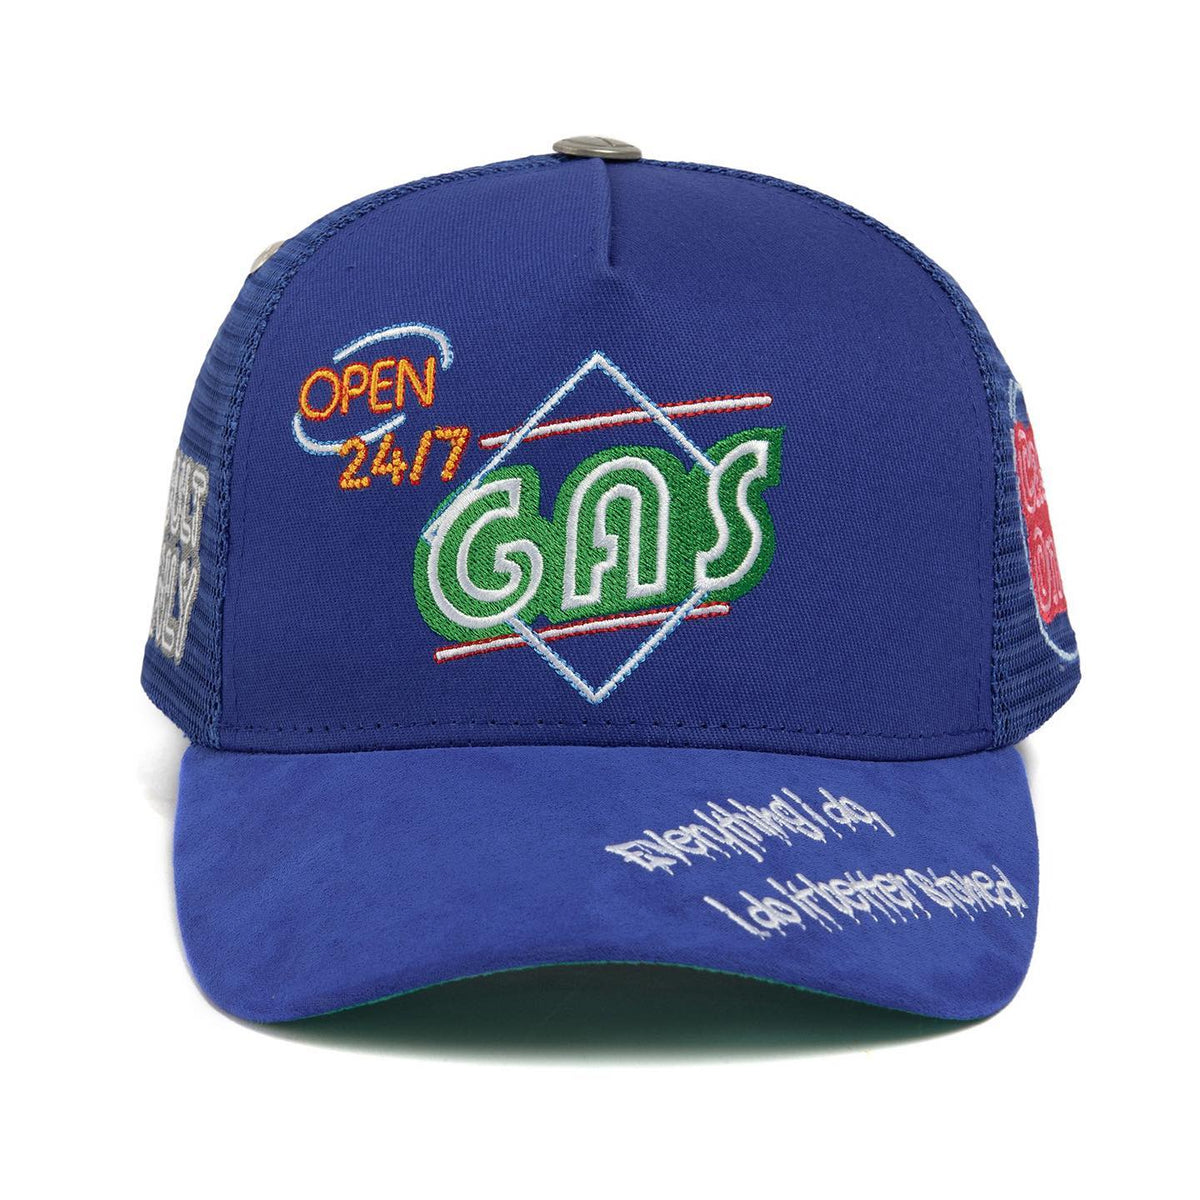 GAS Hat 24/7 - Georgios Clothing Store